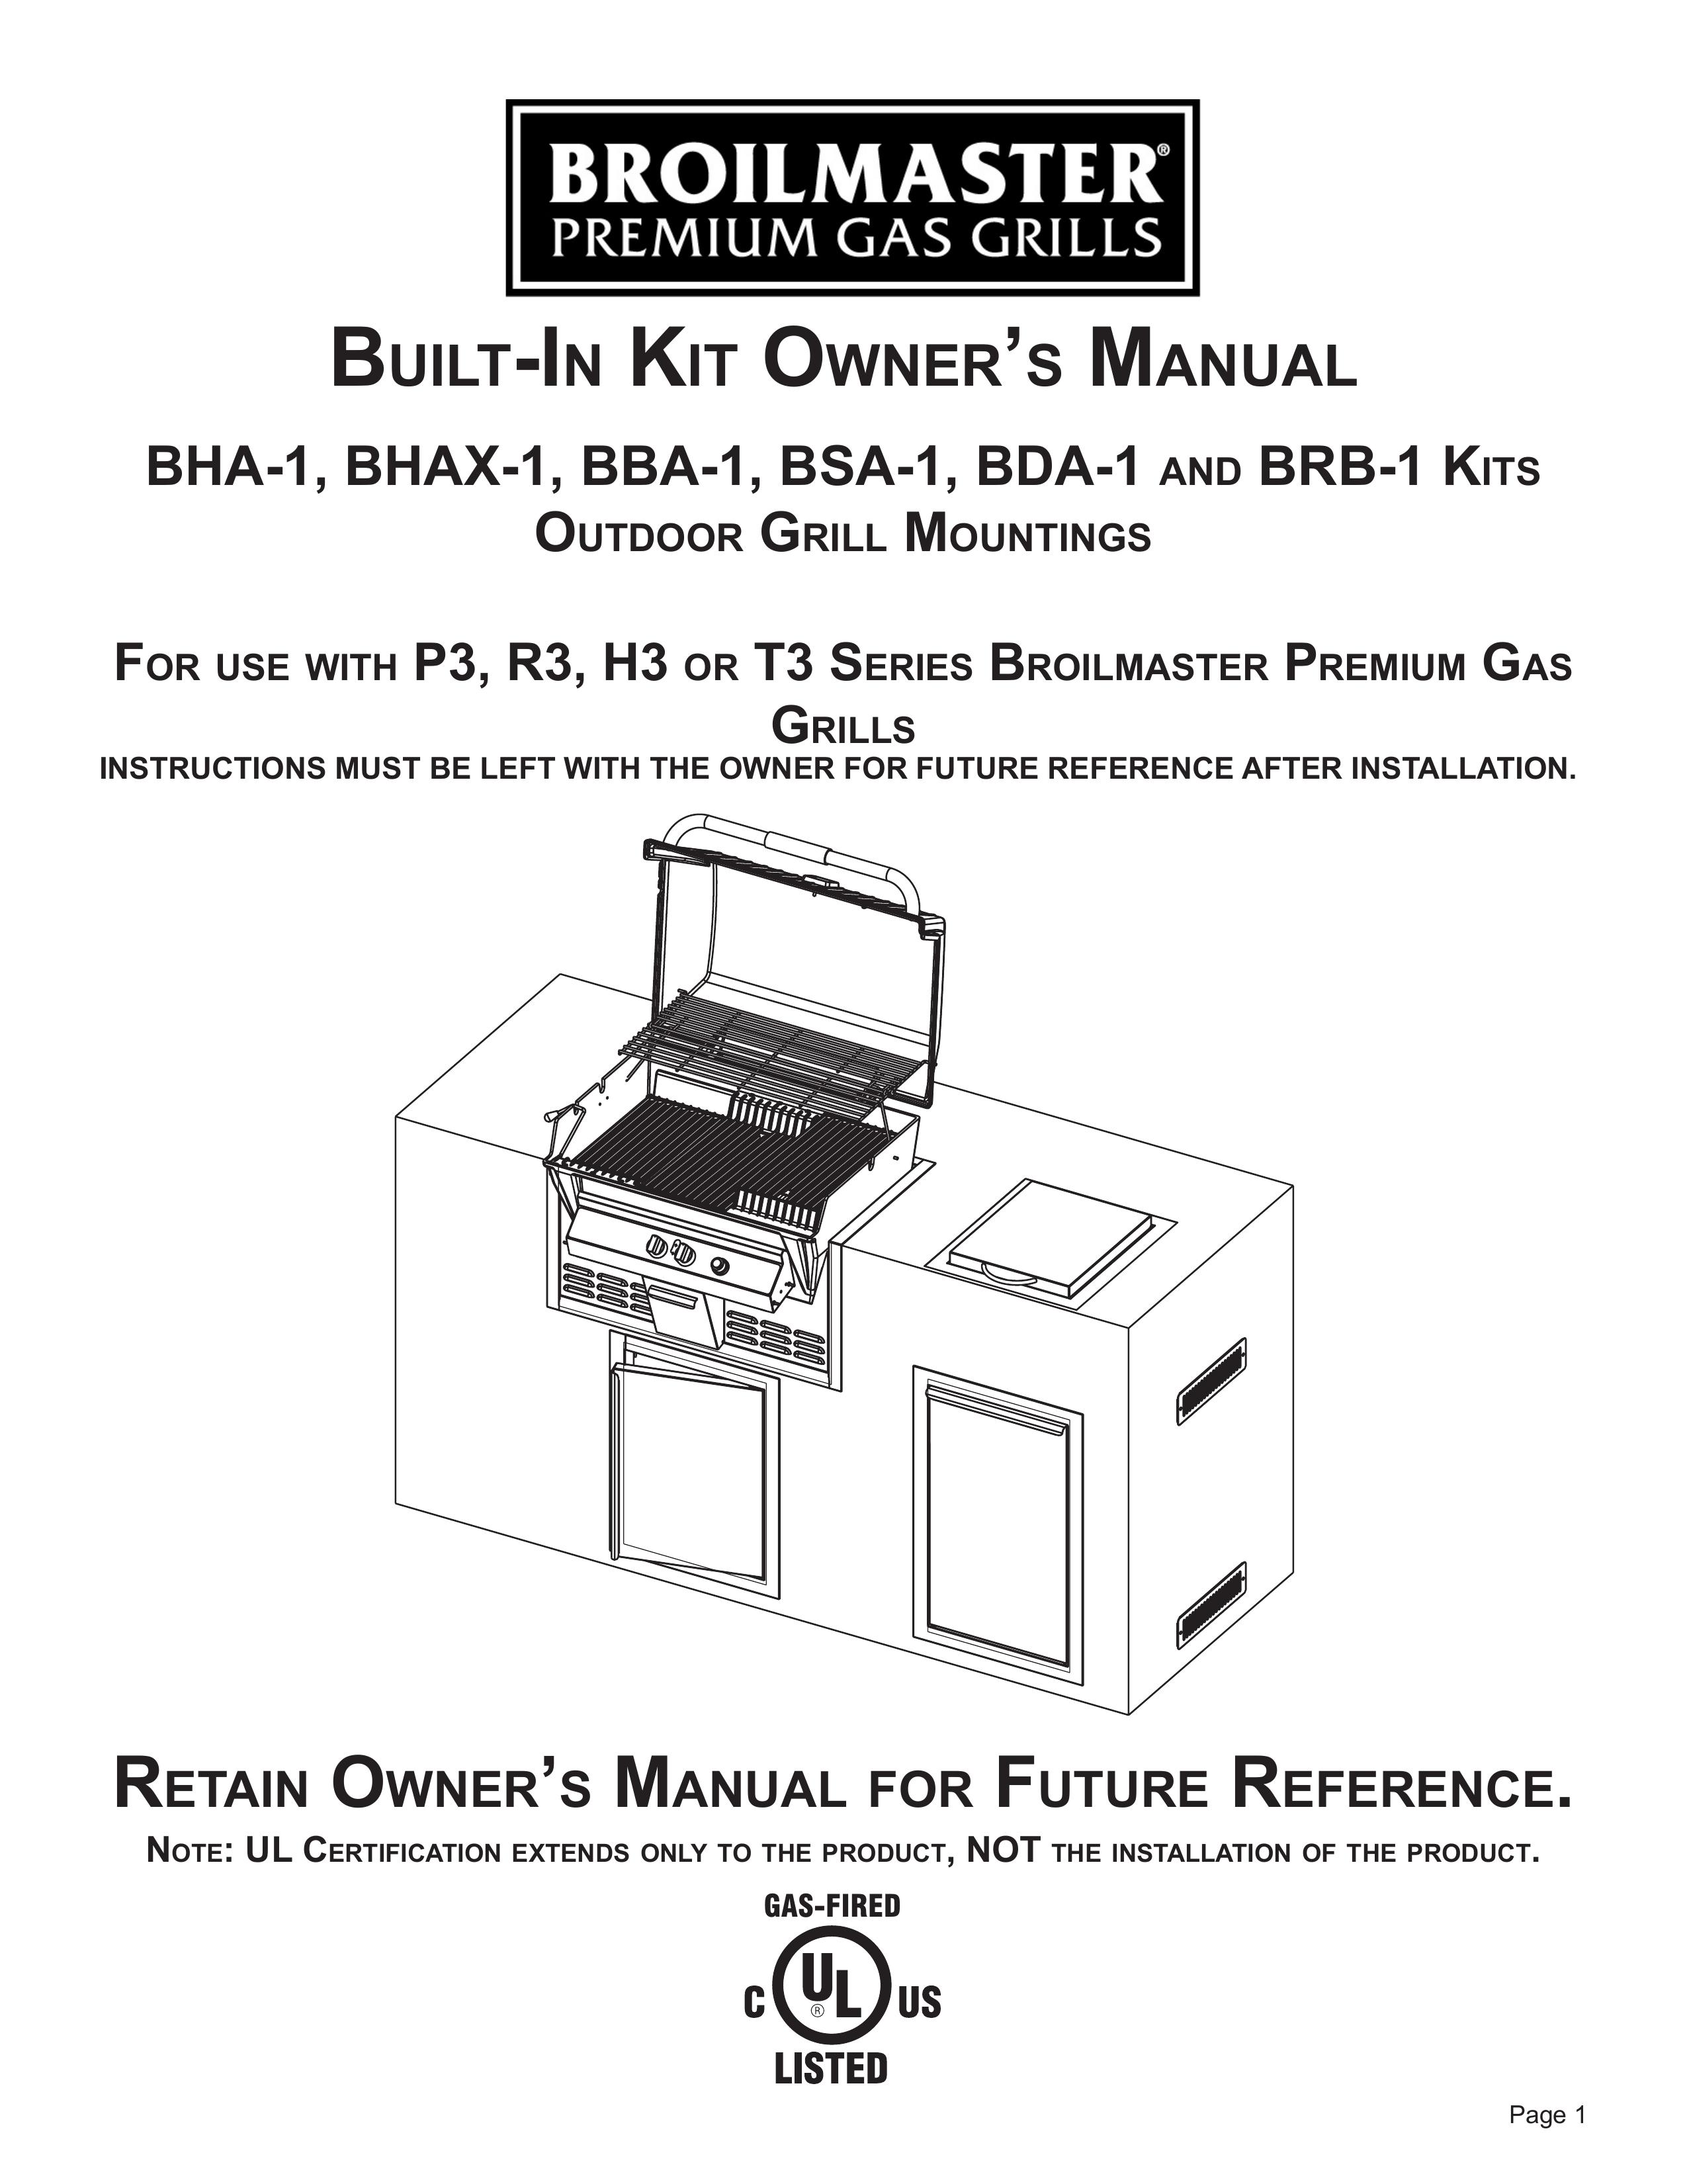 Broilmaster BDA-1 Gas Grill User Manual